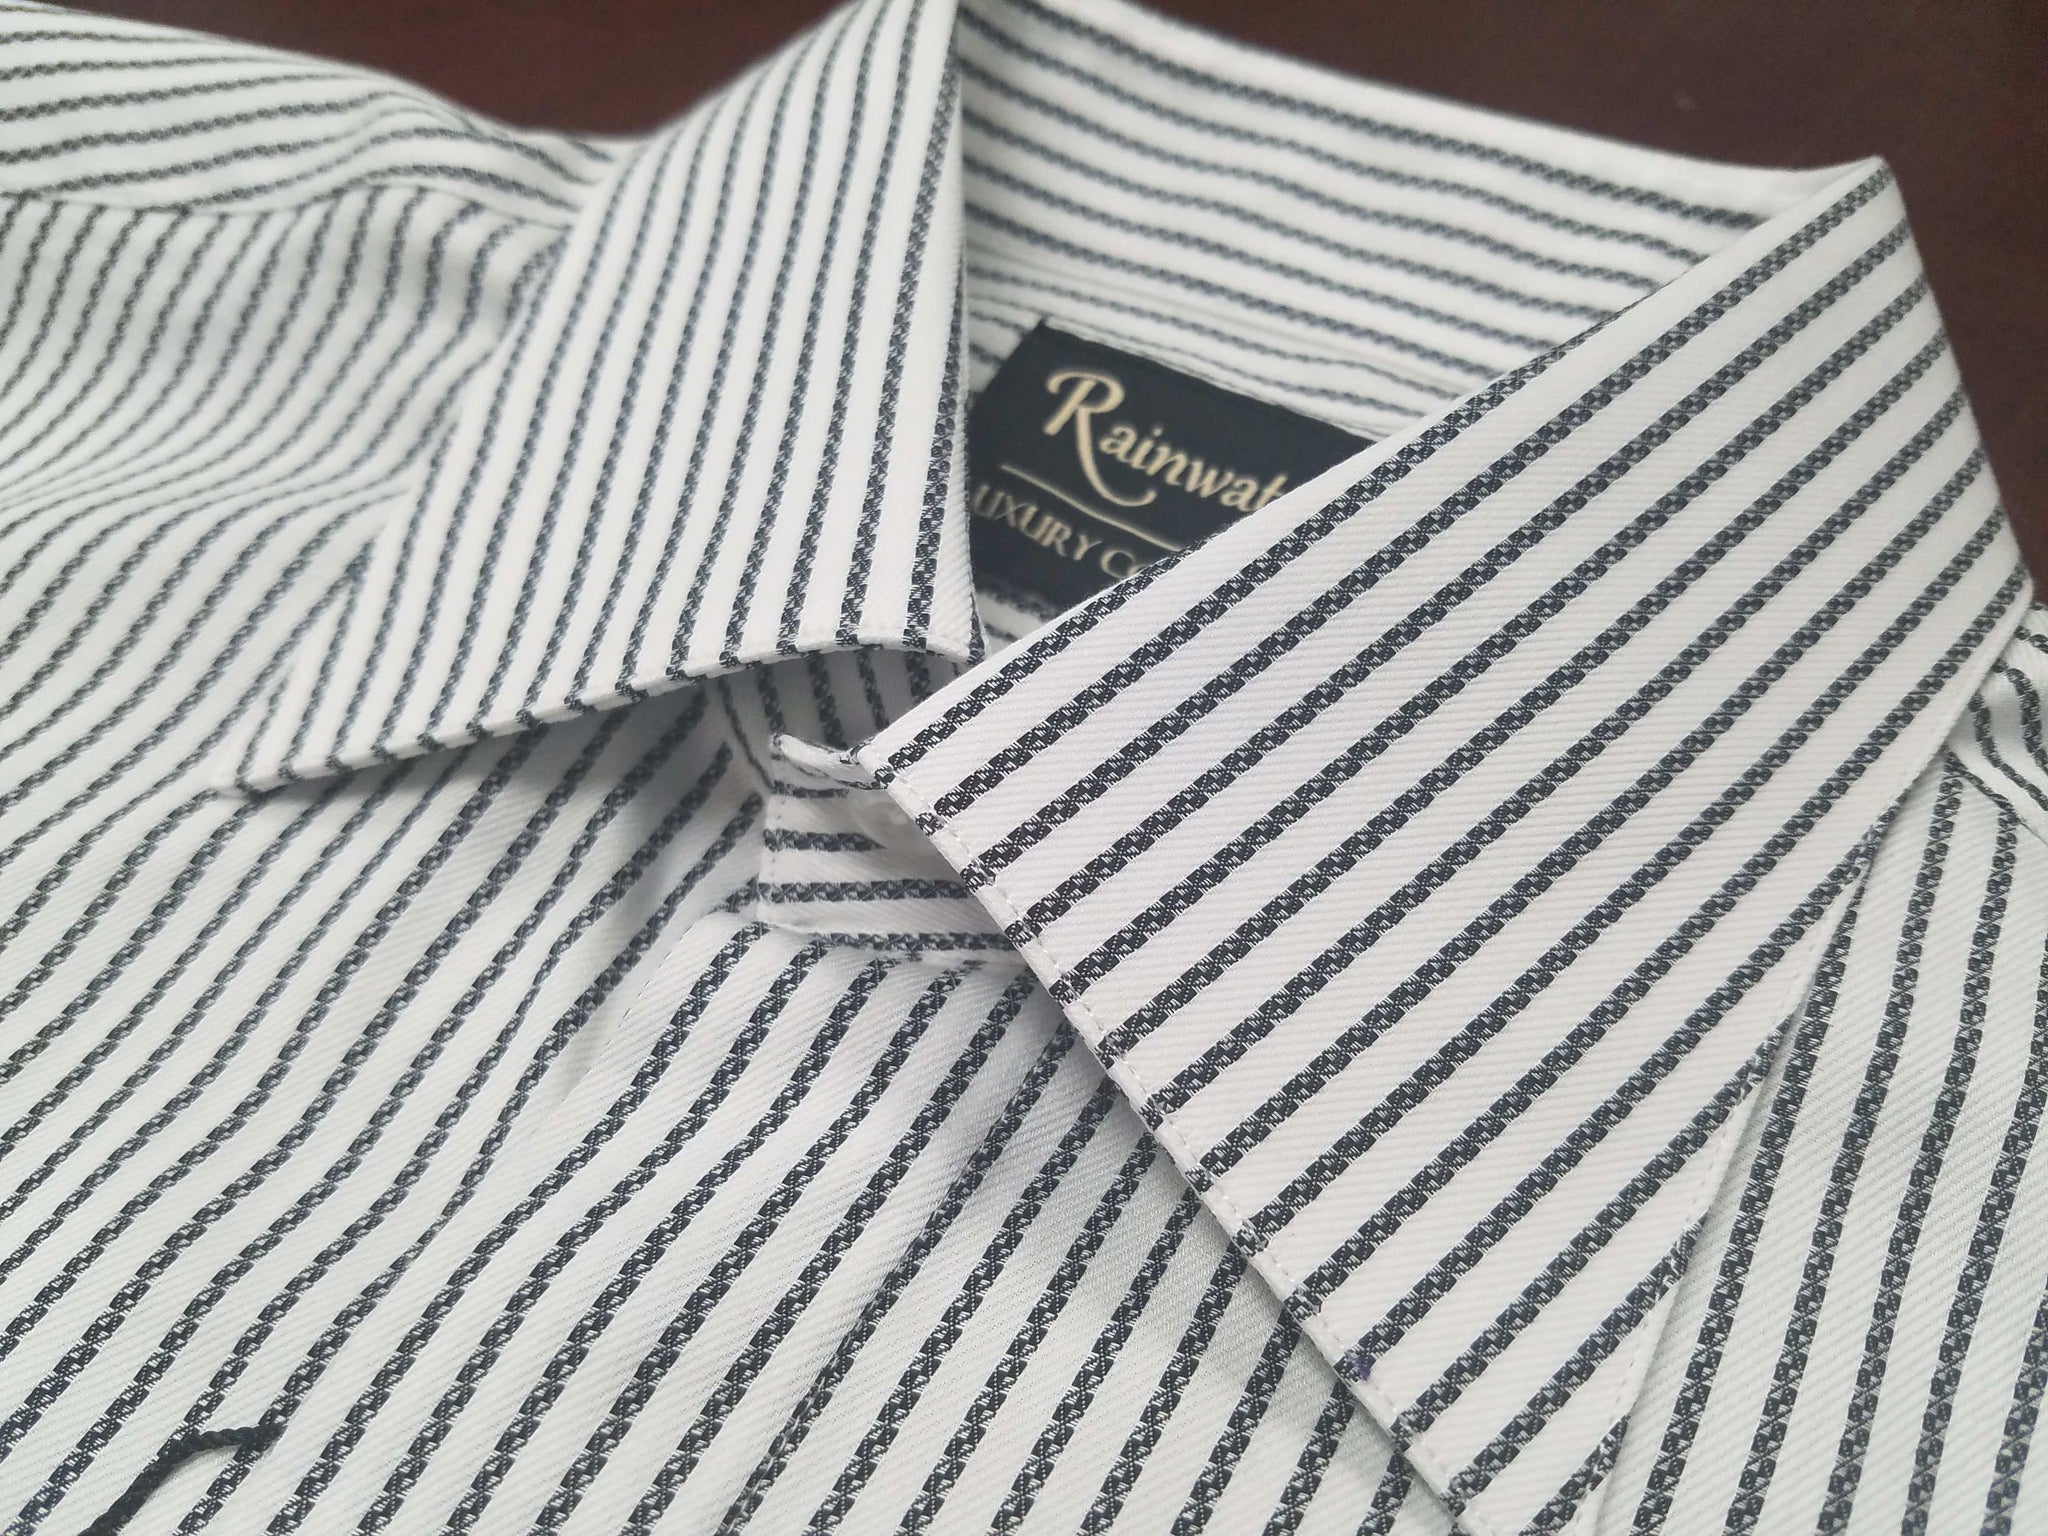 Rainwater's Luxury Collection 100% Cotton Black Stripe French Cuff Dress Shirt - Rainwater's Men's Clothing and Tuxedo Rental